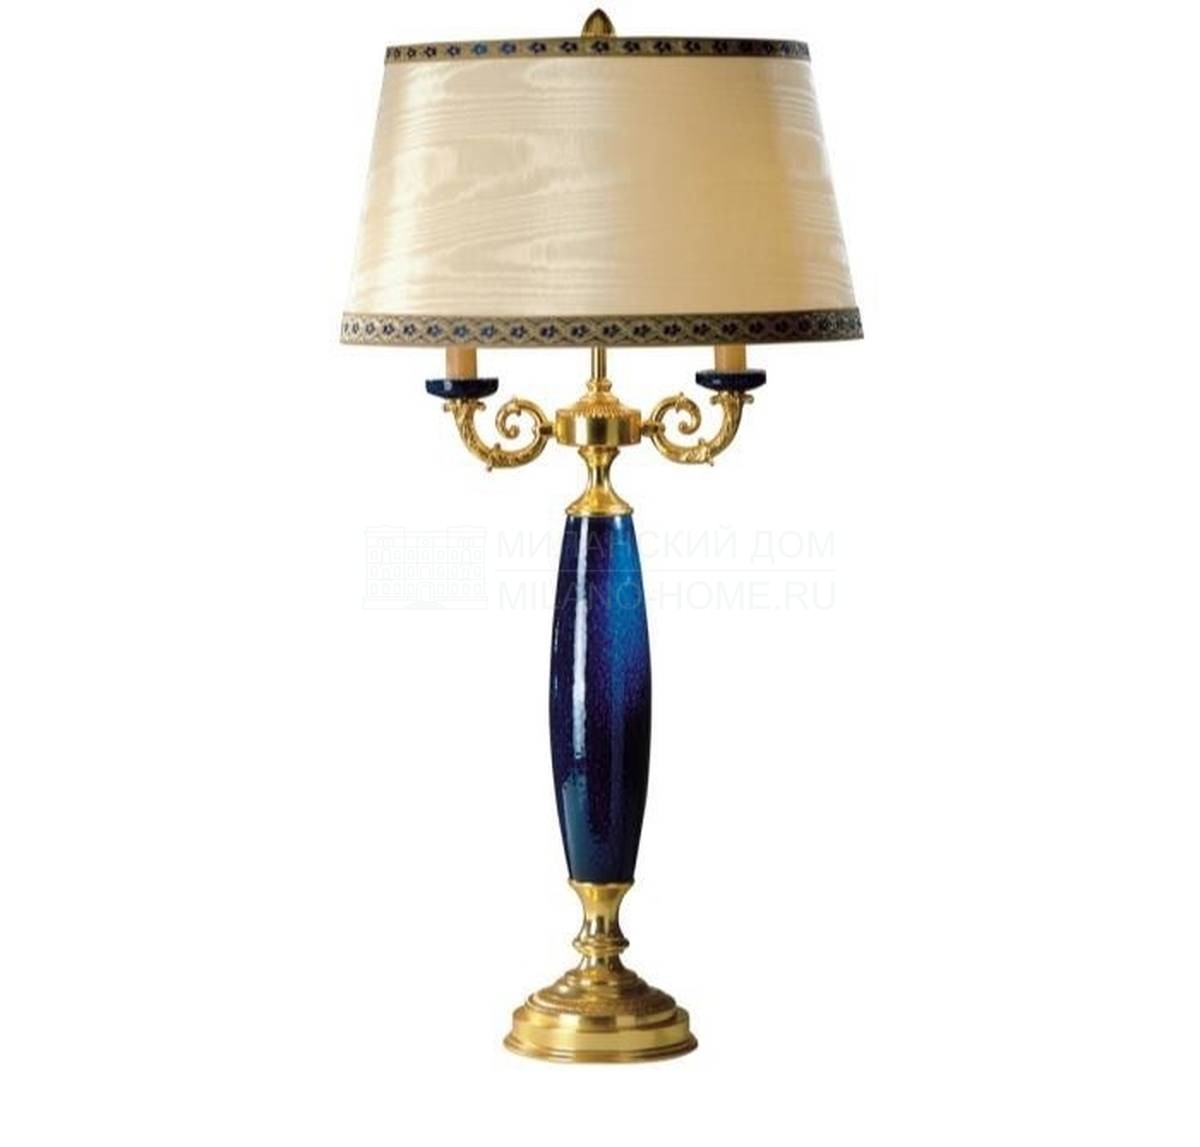 Настольная лампа Rita table lamp two lights из Италии фабрики MARIONI